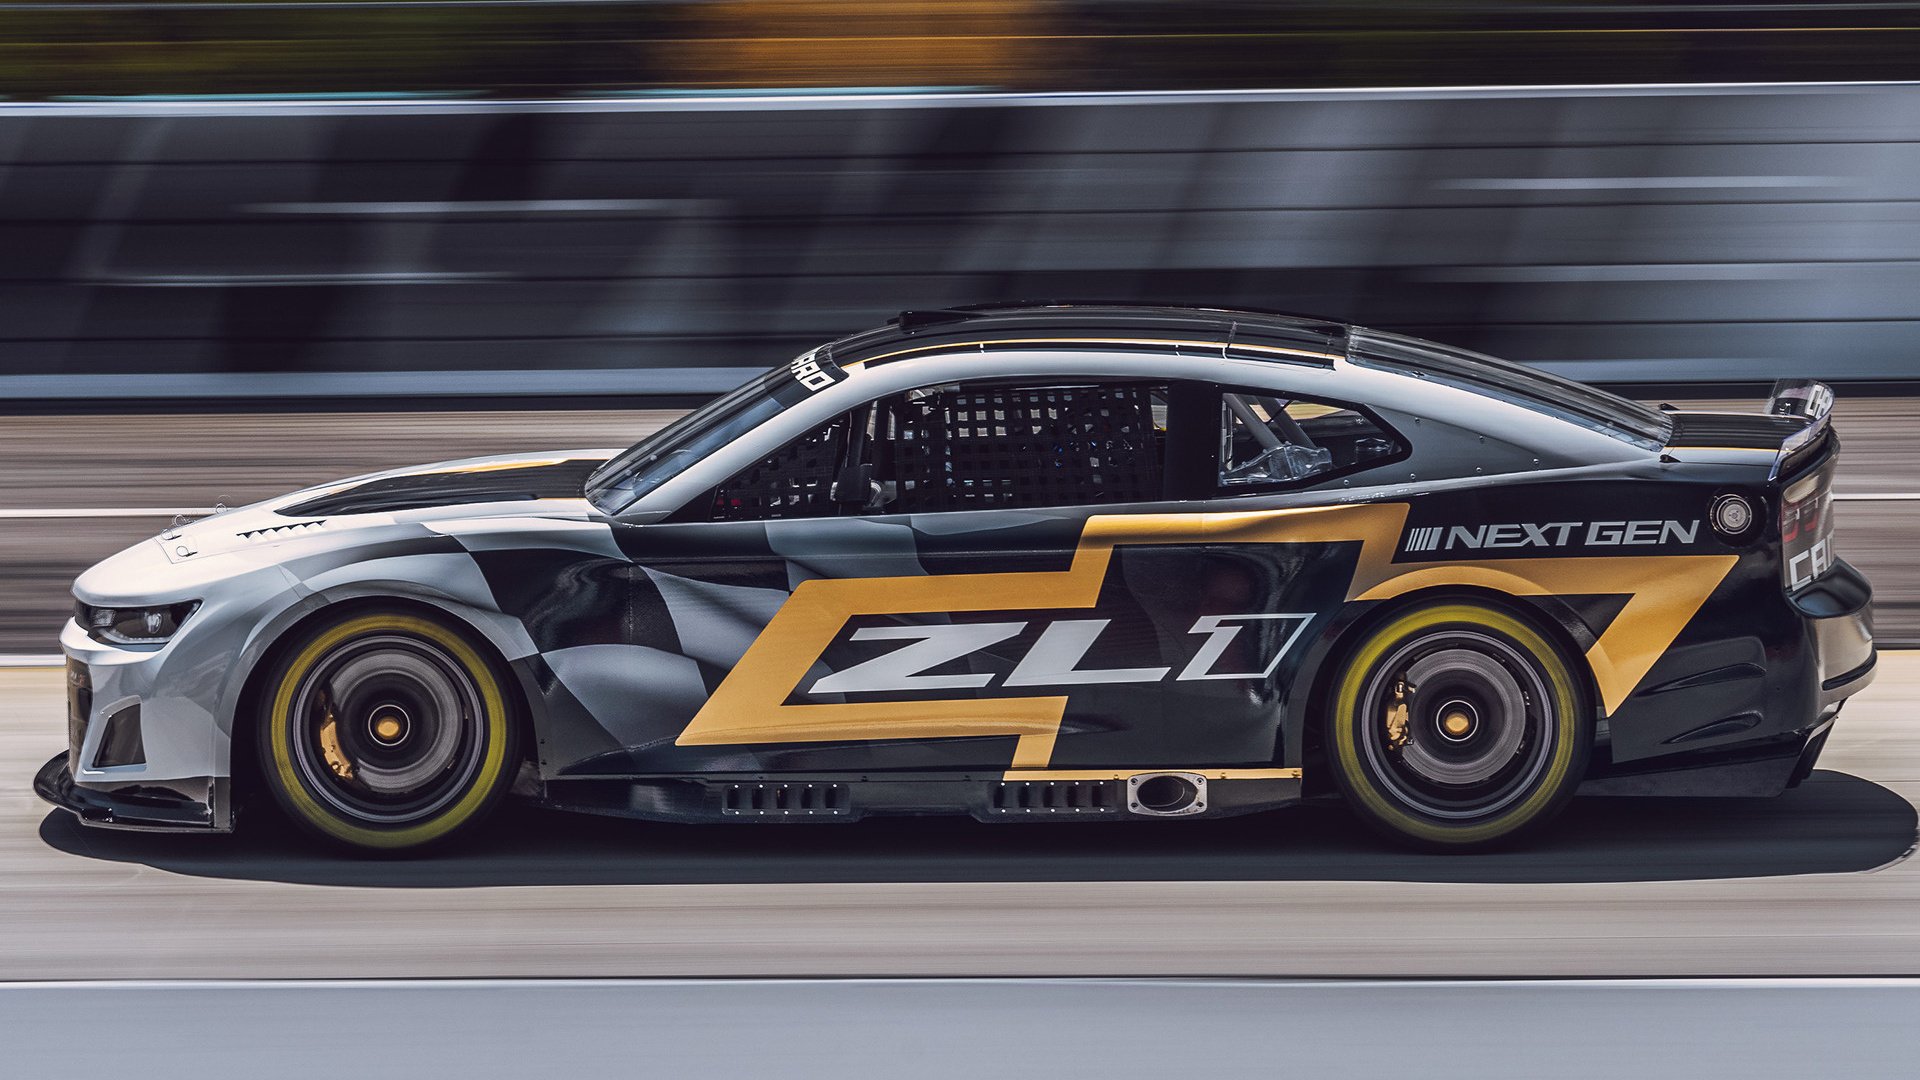 2022 Chevrolet Camaro ZL1 NASCAR Race Car and HD Image